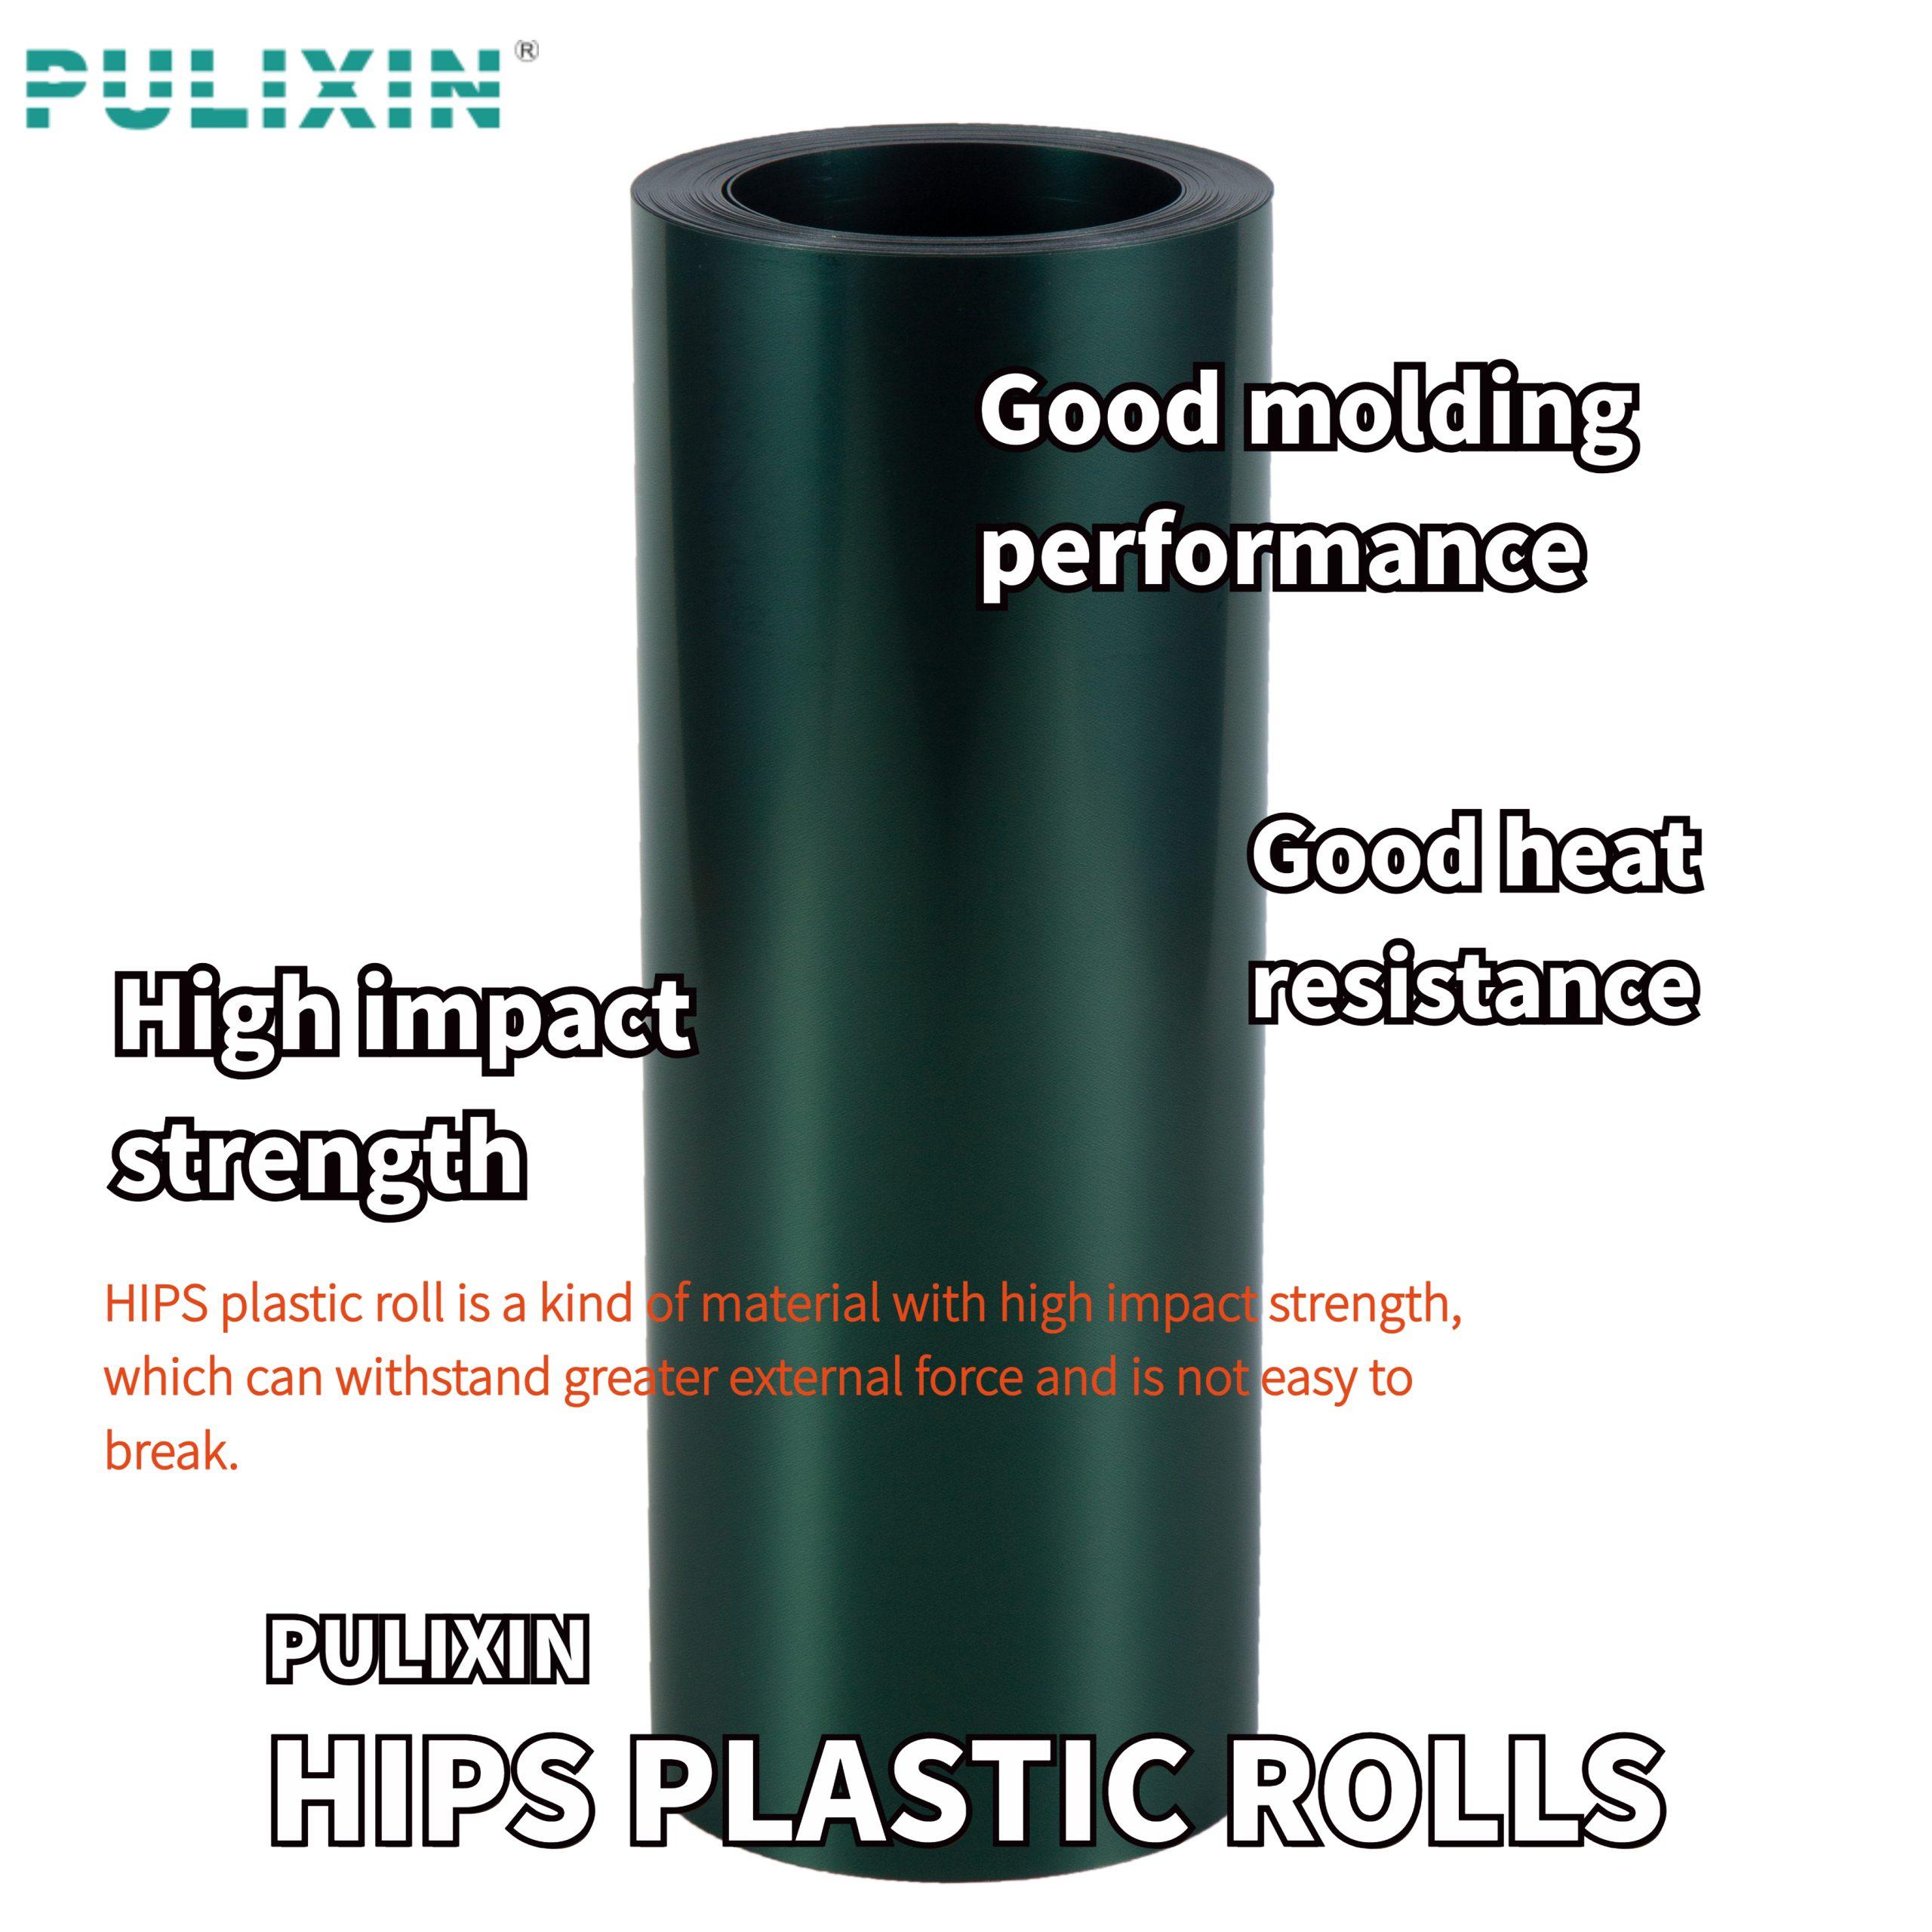 Characteristics of HIPS plastic rolls